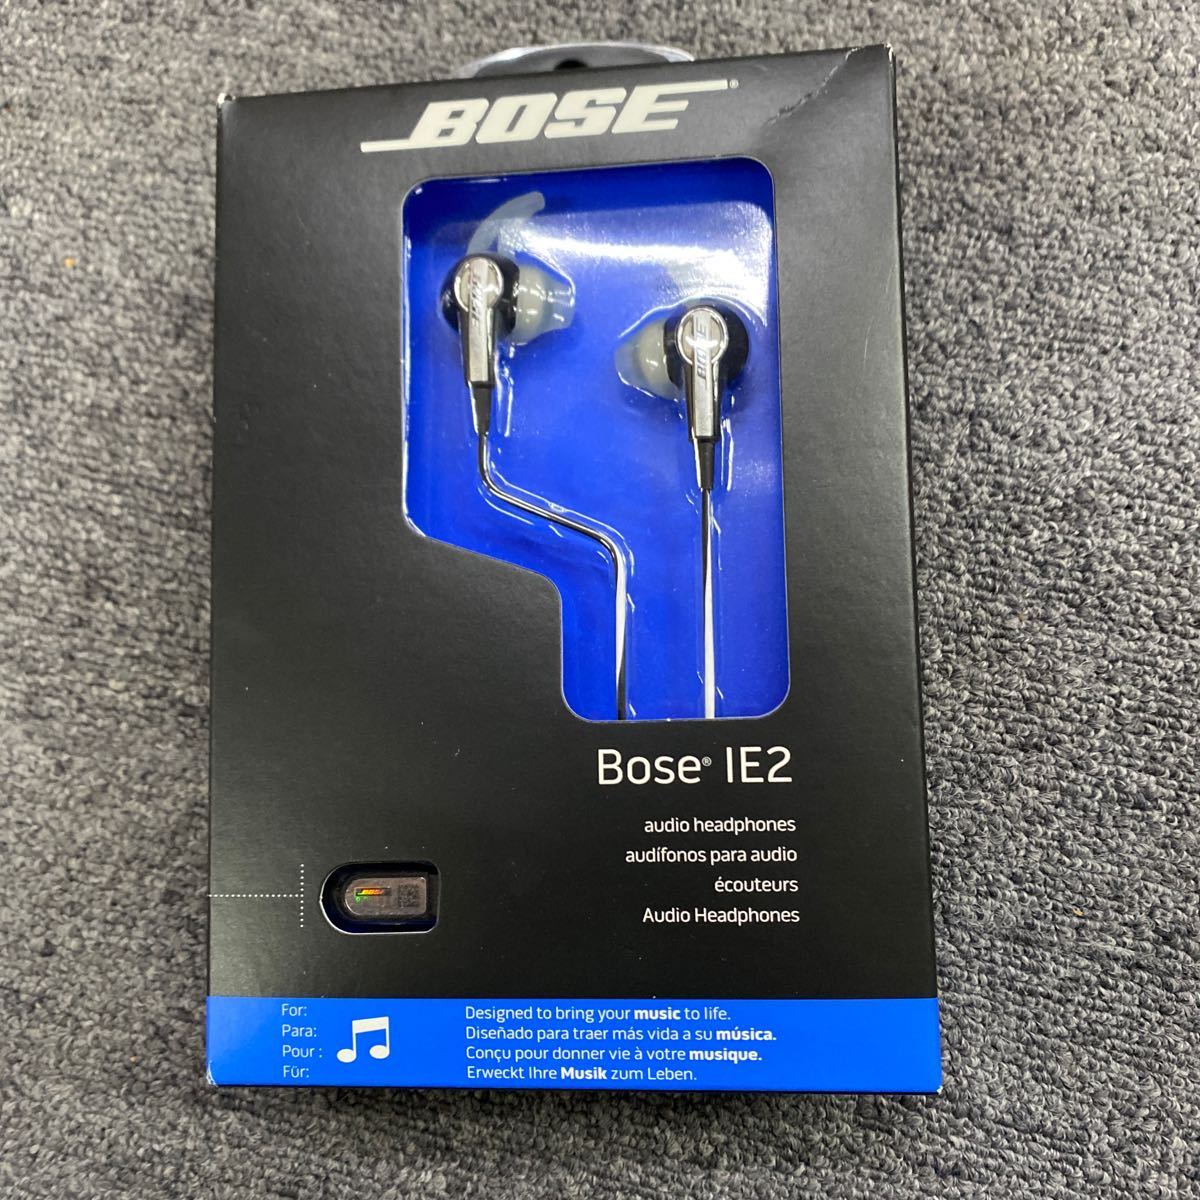 360 BOSE (ボーズ) Bose IE2 audio headphones イヤホン 未使用品　_画像1